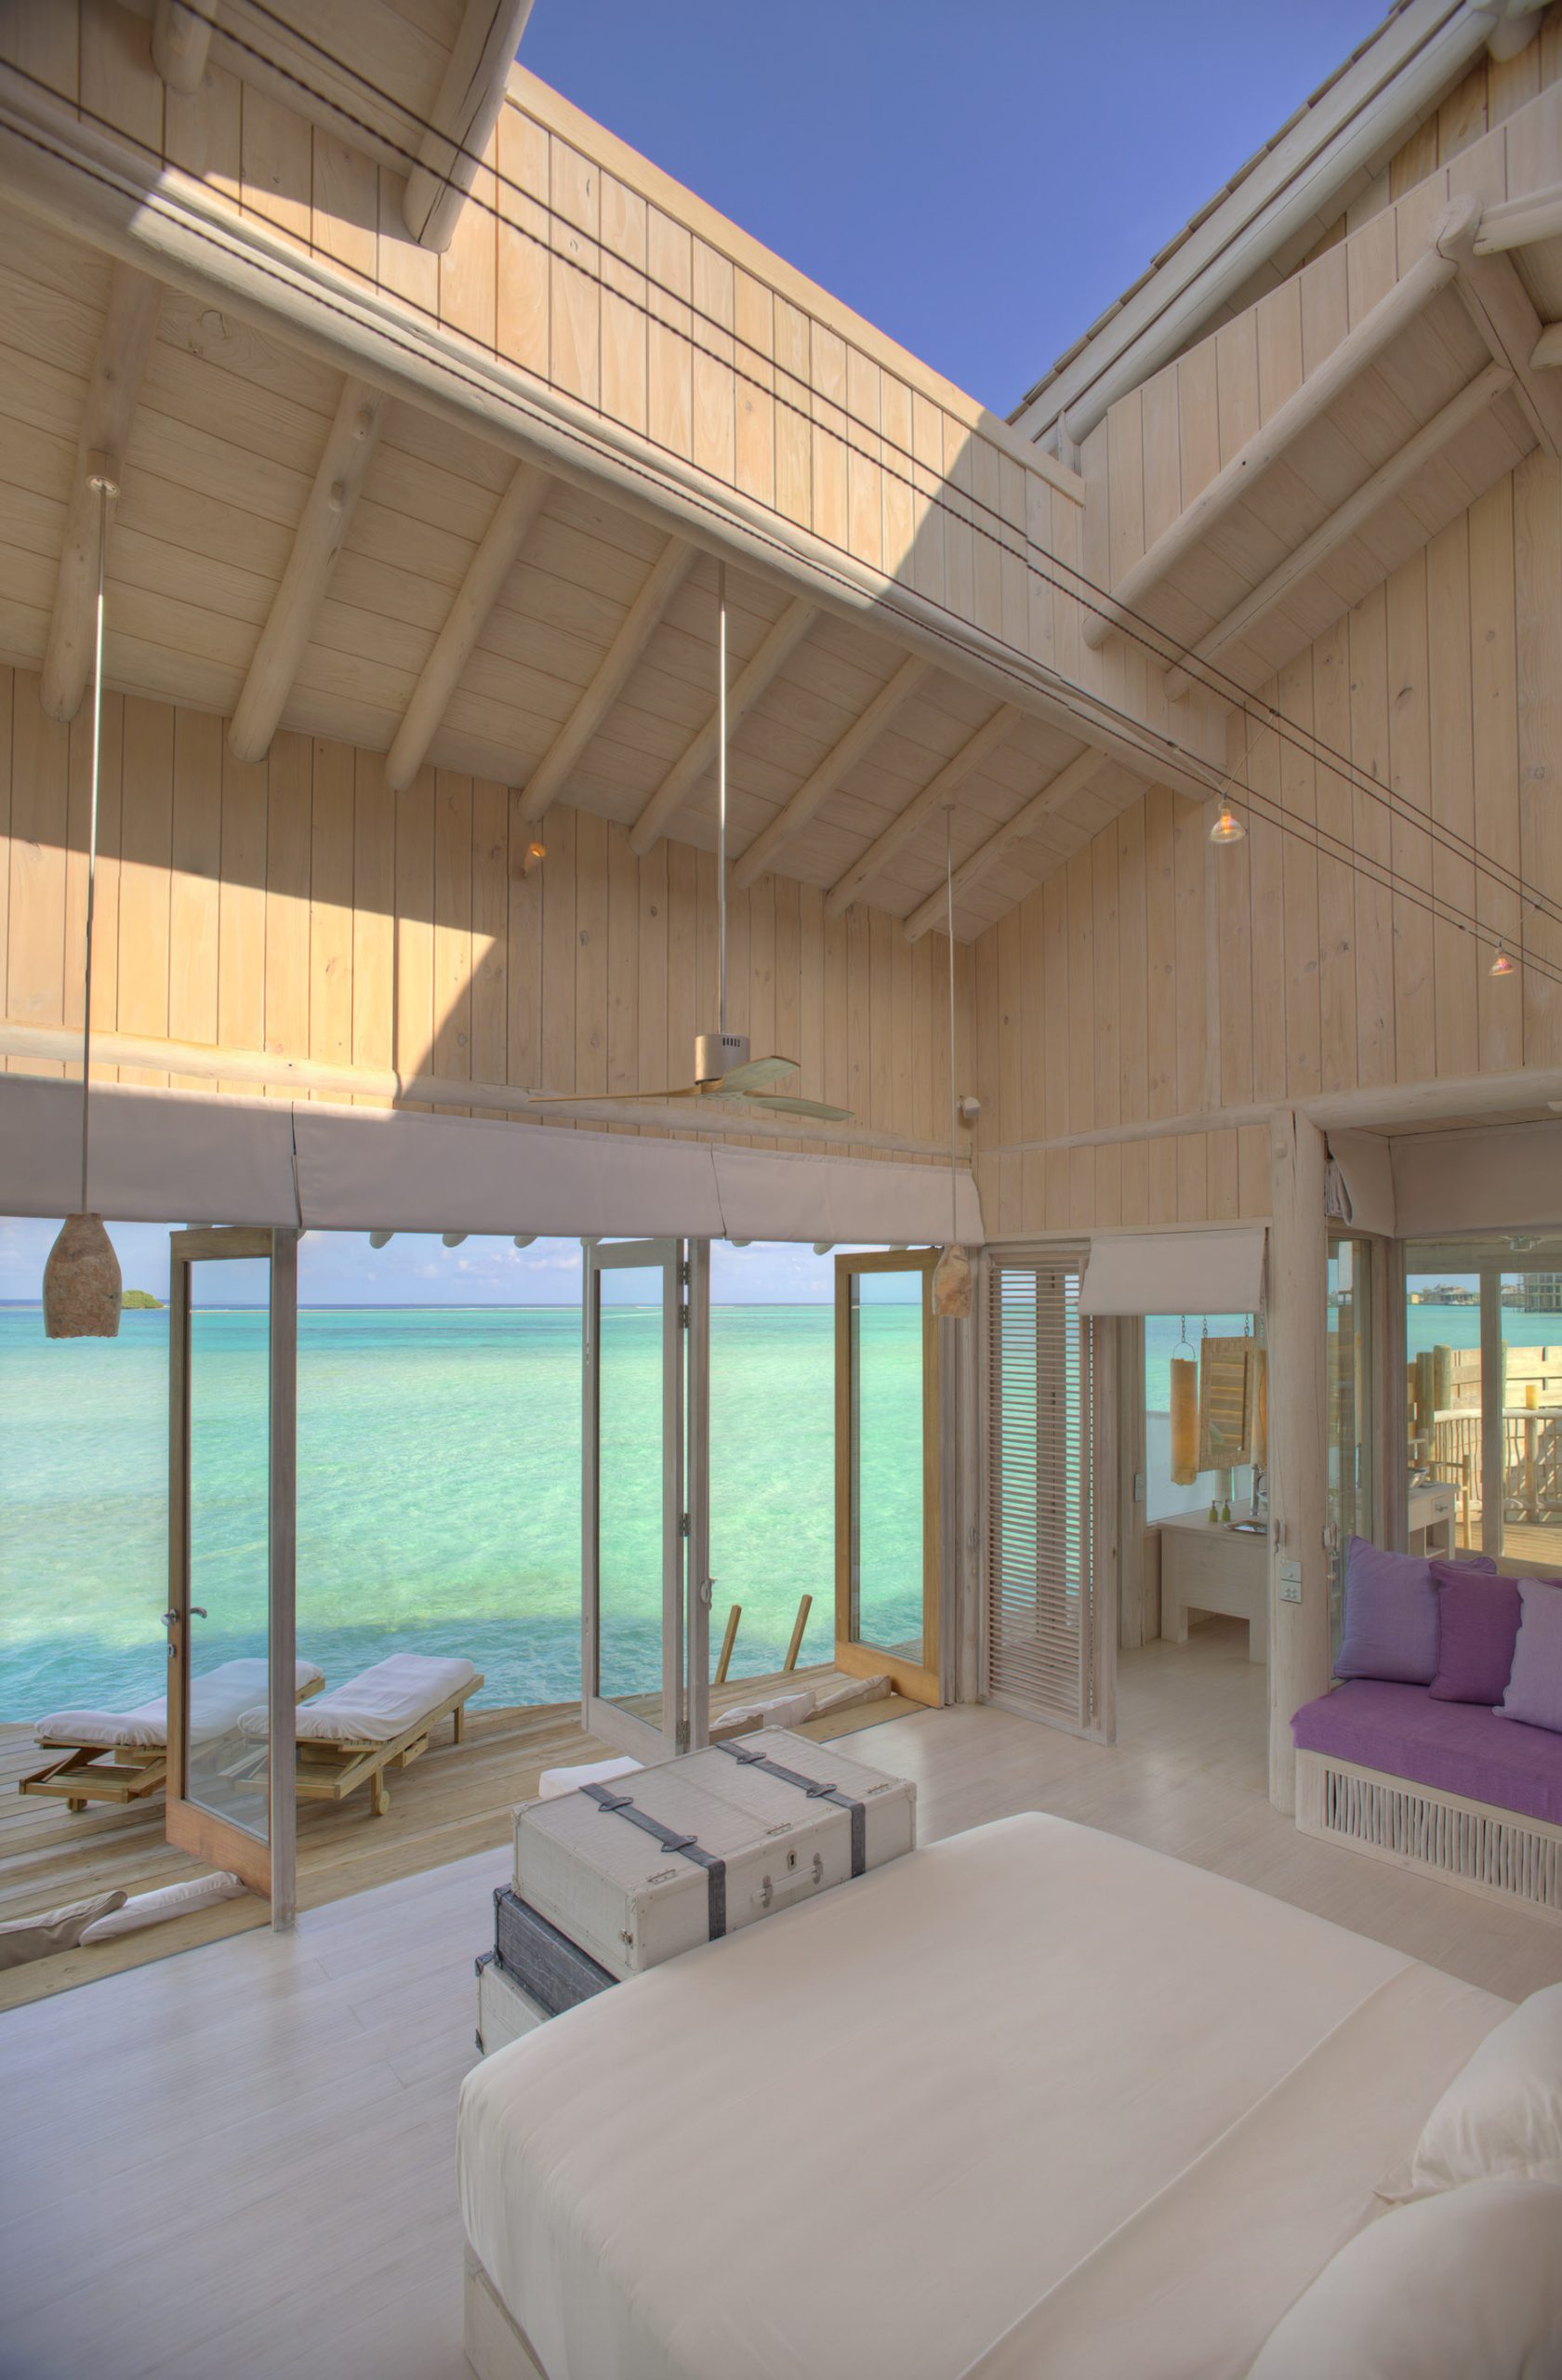 Soneva Jani Resort – Noonu Atoll, Medhufaru, Maldives – 2 Bedroom Water Retreat Villa Bedroom Sunroof